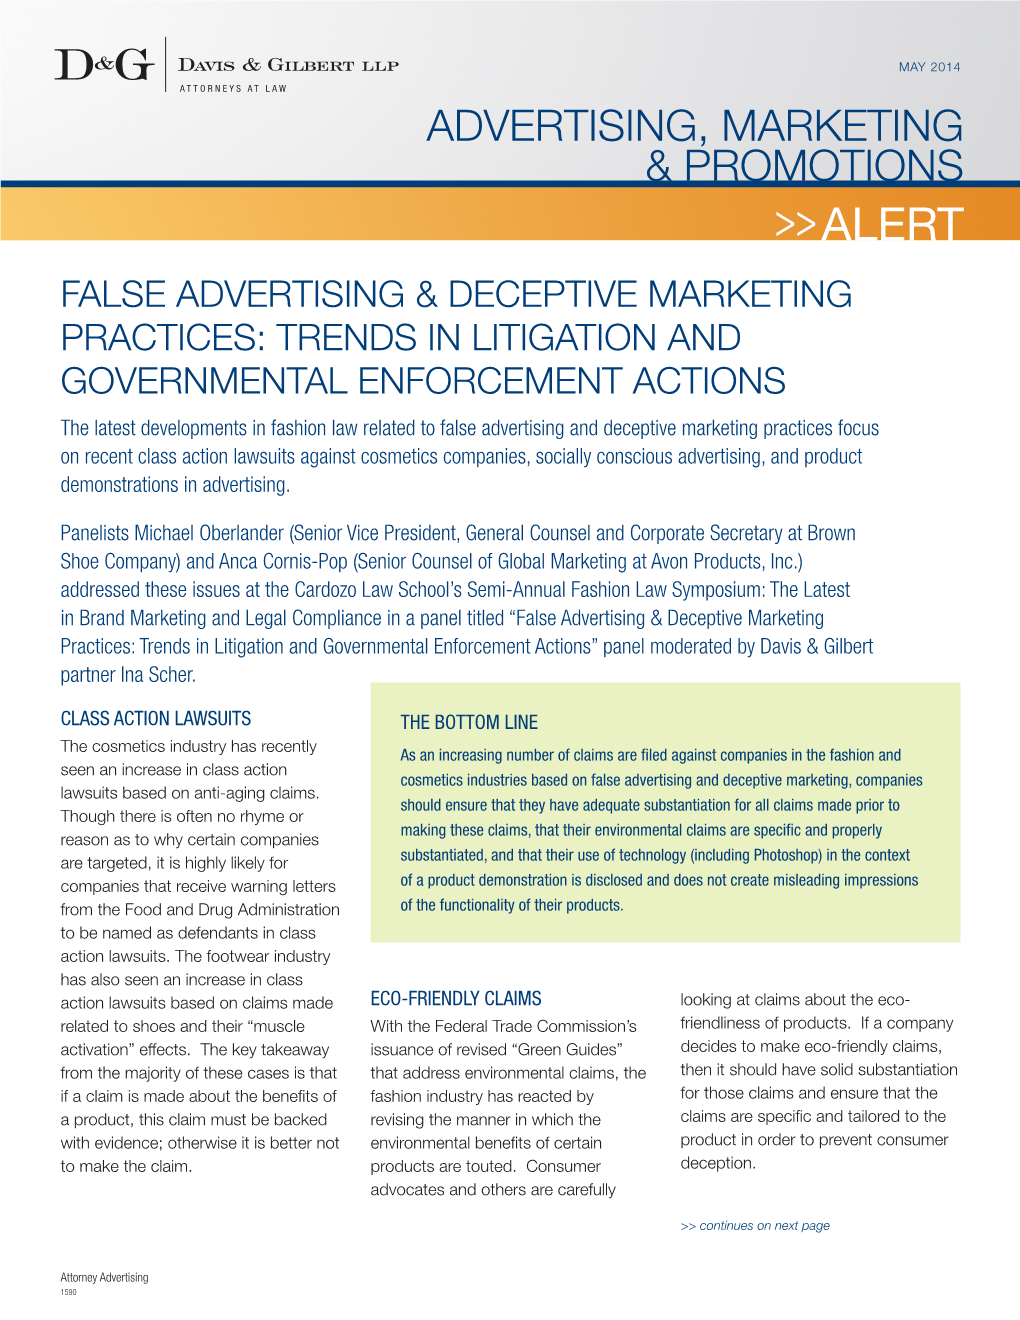 False Advertising & Deceptive Marketing Practices